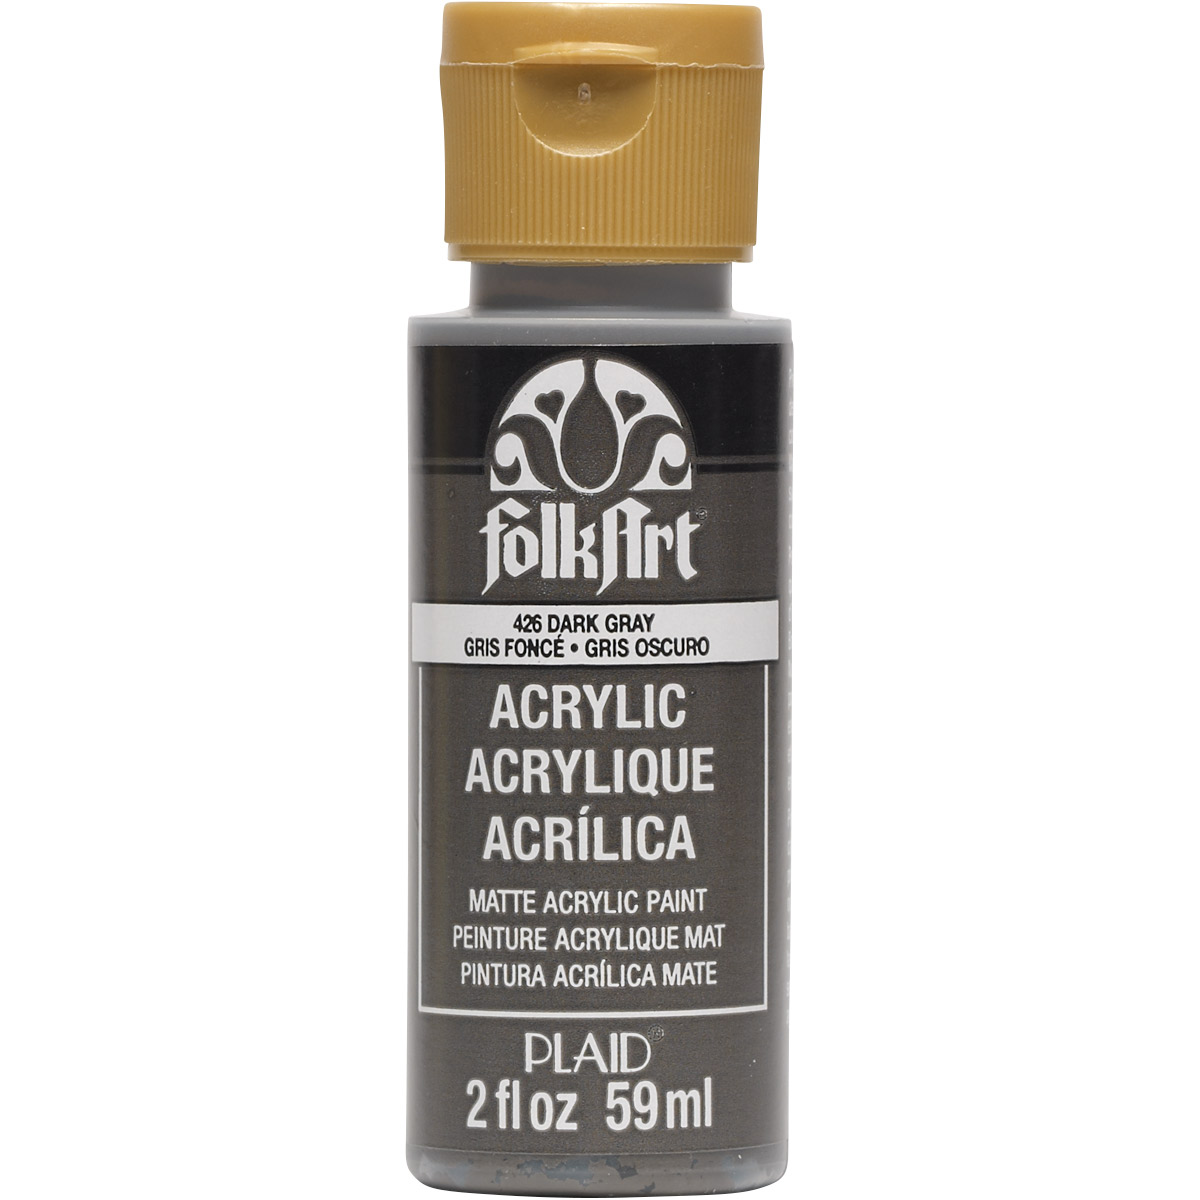 FolkArt ® Acrylic Colors - Dark Gray, 2 oz. - 426